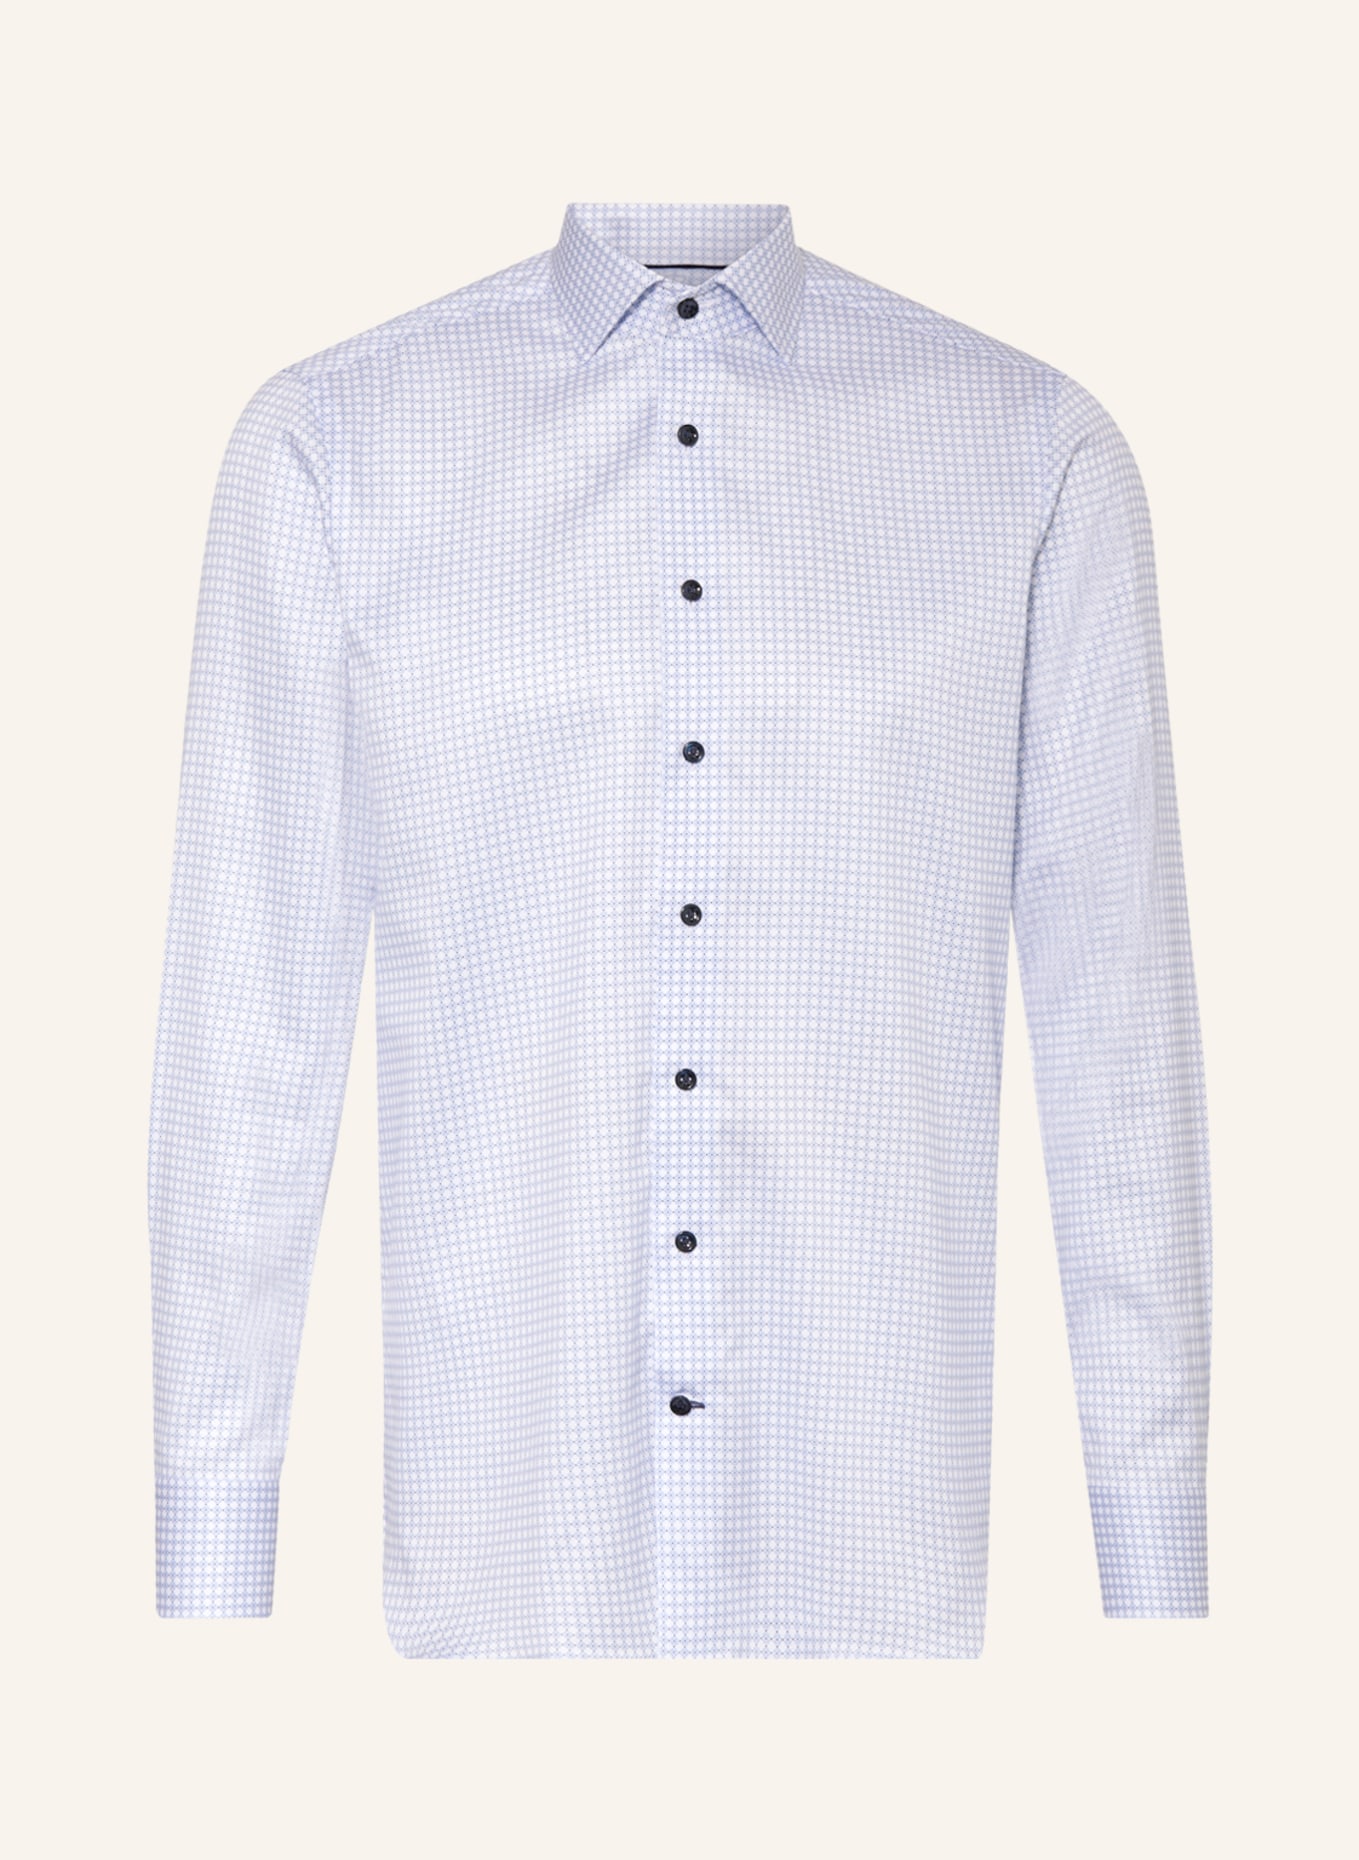 OLYMP SIGNATURE Hemd slim fit, Farbe: WEISS/ HELLBLAU (Bild 1)